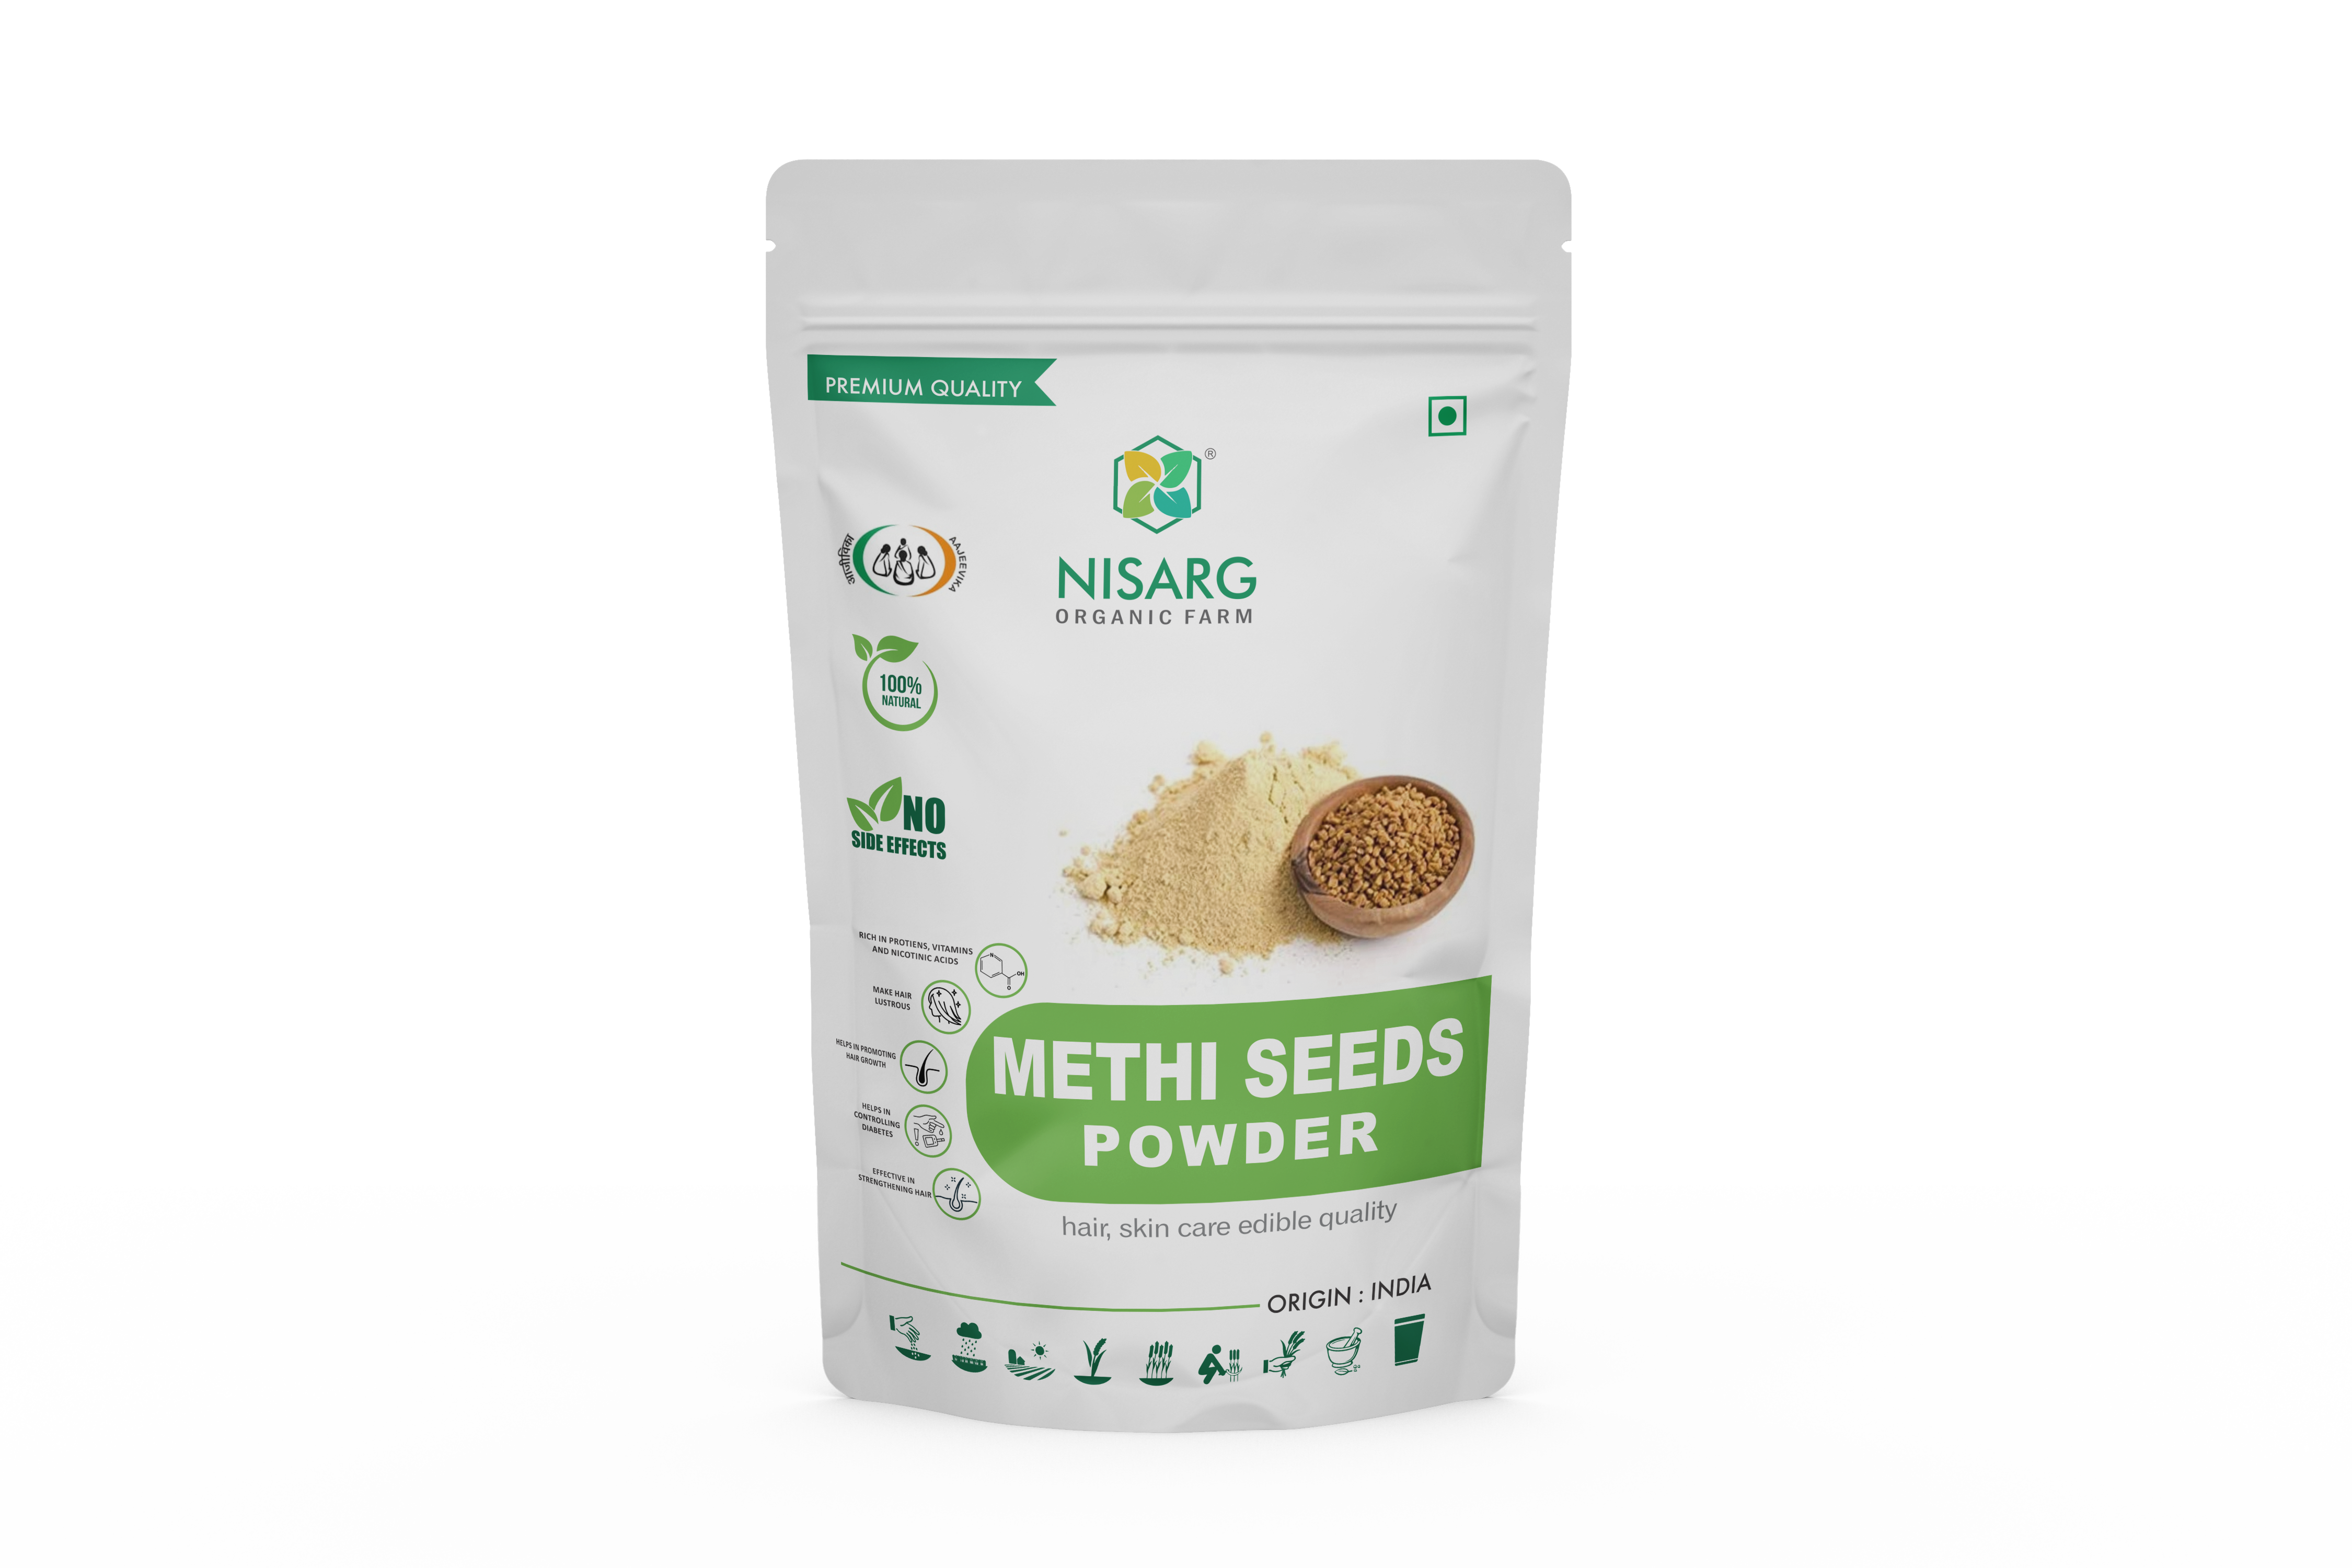 Product: Nisarg Fenugreek Seeds Powder